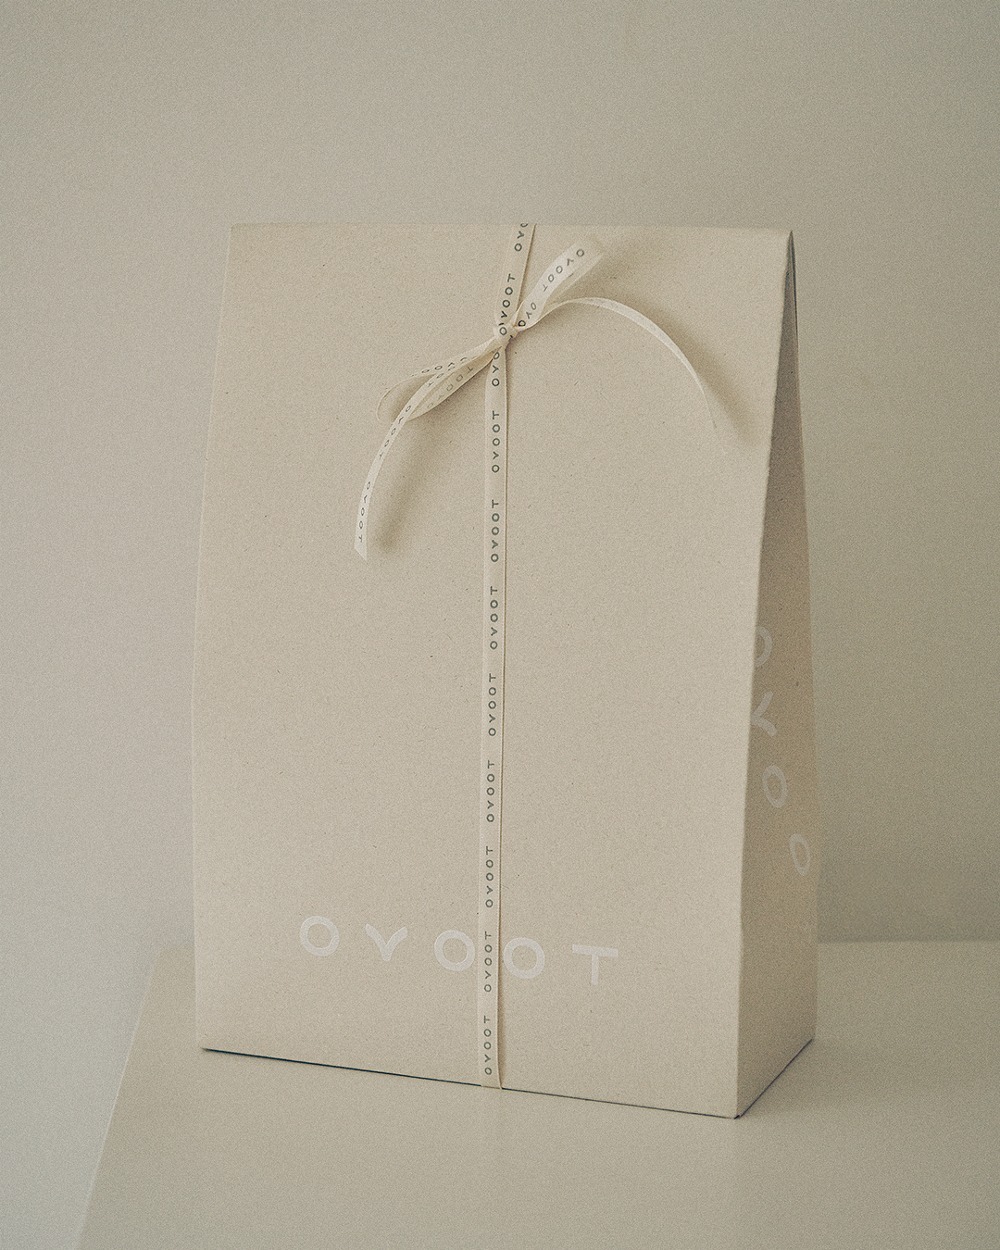 OVOOT Gift Wrappinga free service